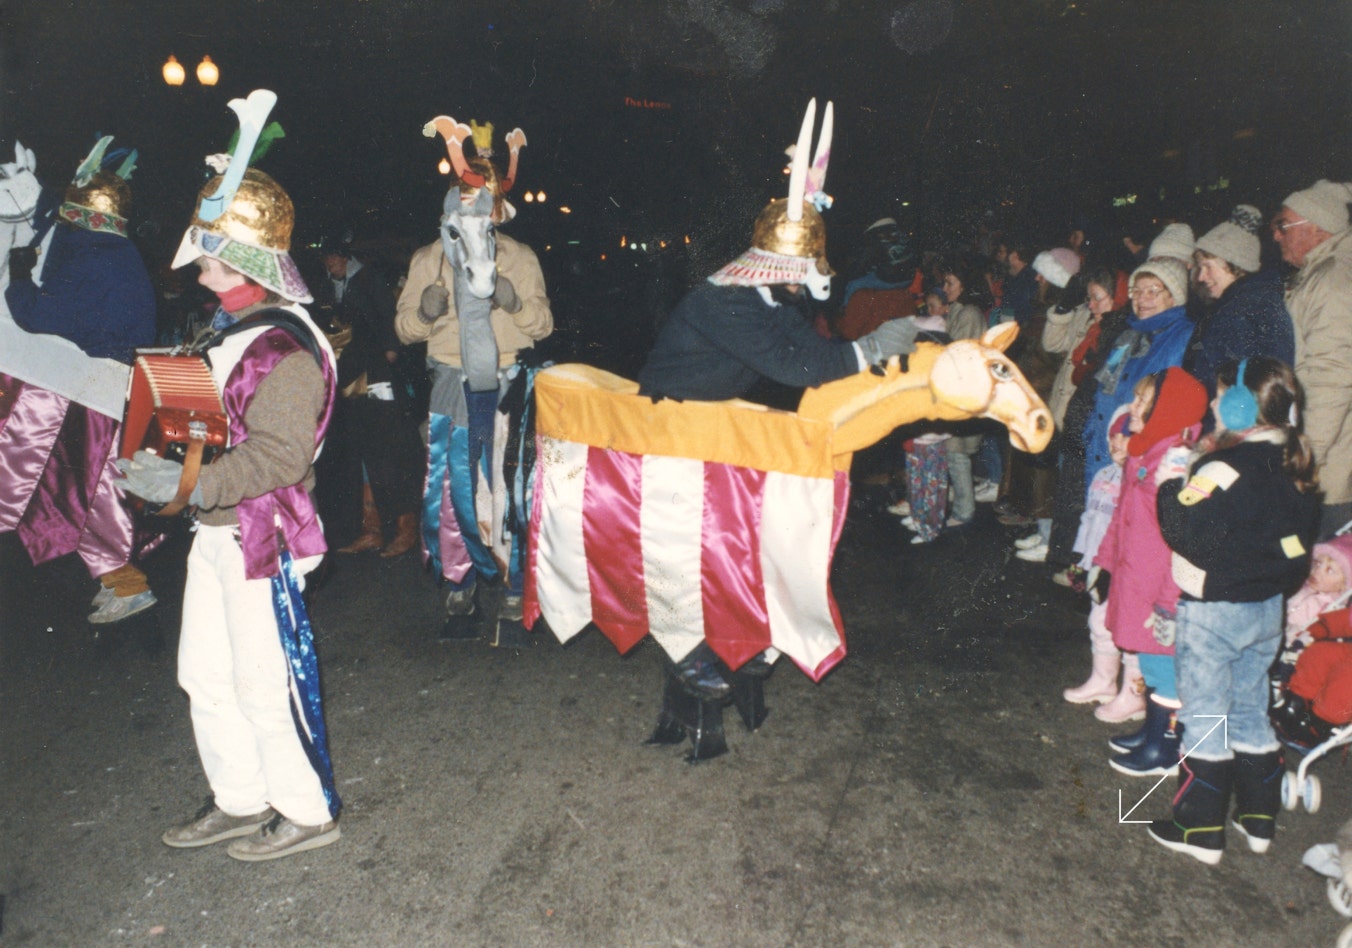 Ryan Thomson playing his accordion while "Samurai Warriors" prance around him on hobby horses during the 1996 Boston First Night Parade